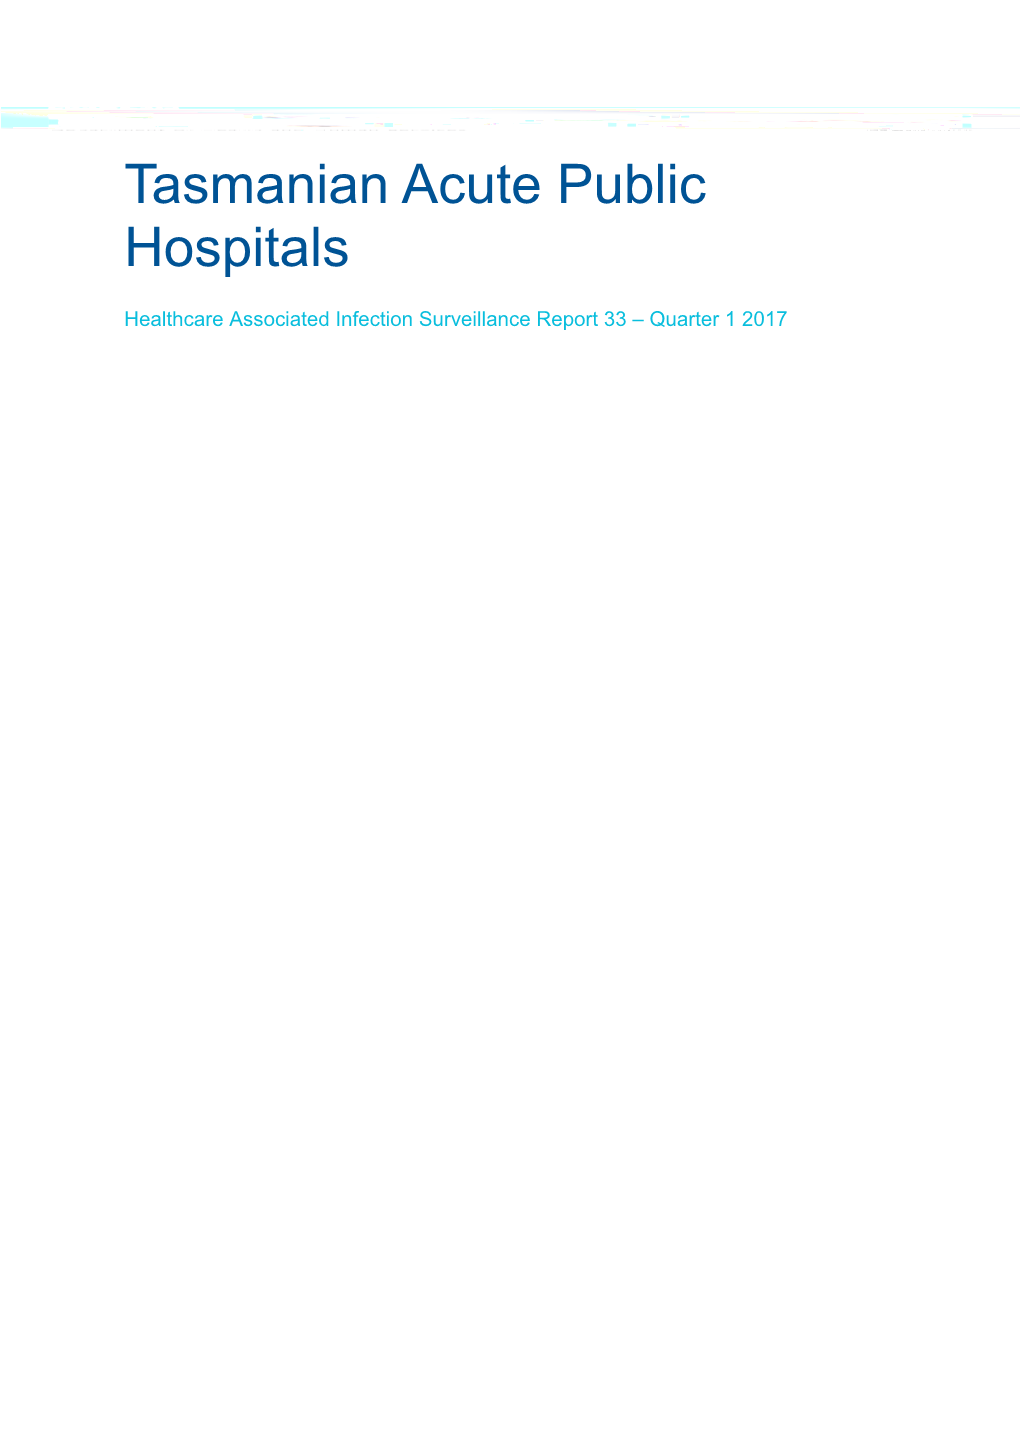 Tasmanian Acute Public Hospitals Healthcare Associated Infection Surveillance Report